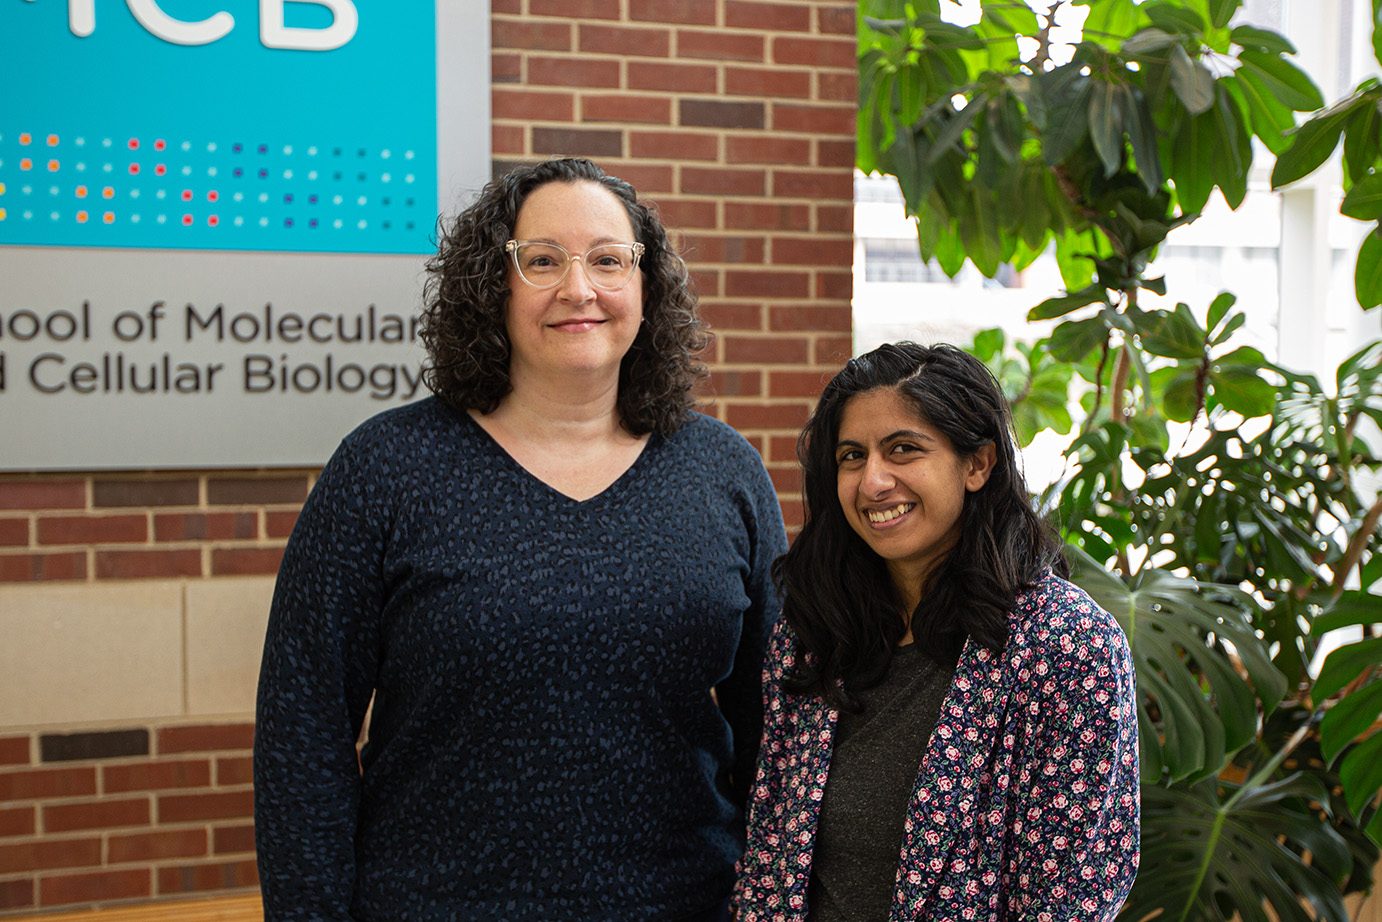 Microbiology professor Cari Vanderpool and PhD student Sabrina Abdulla